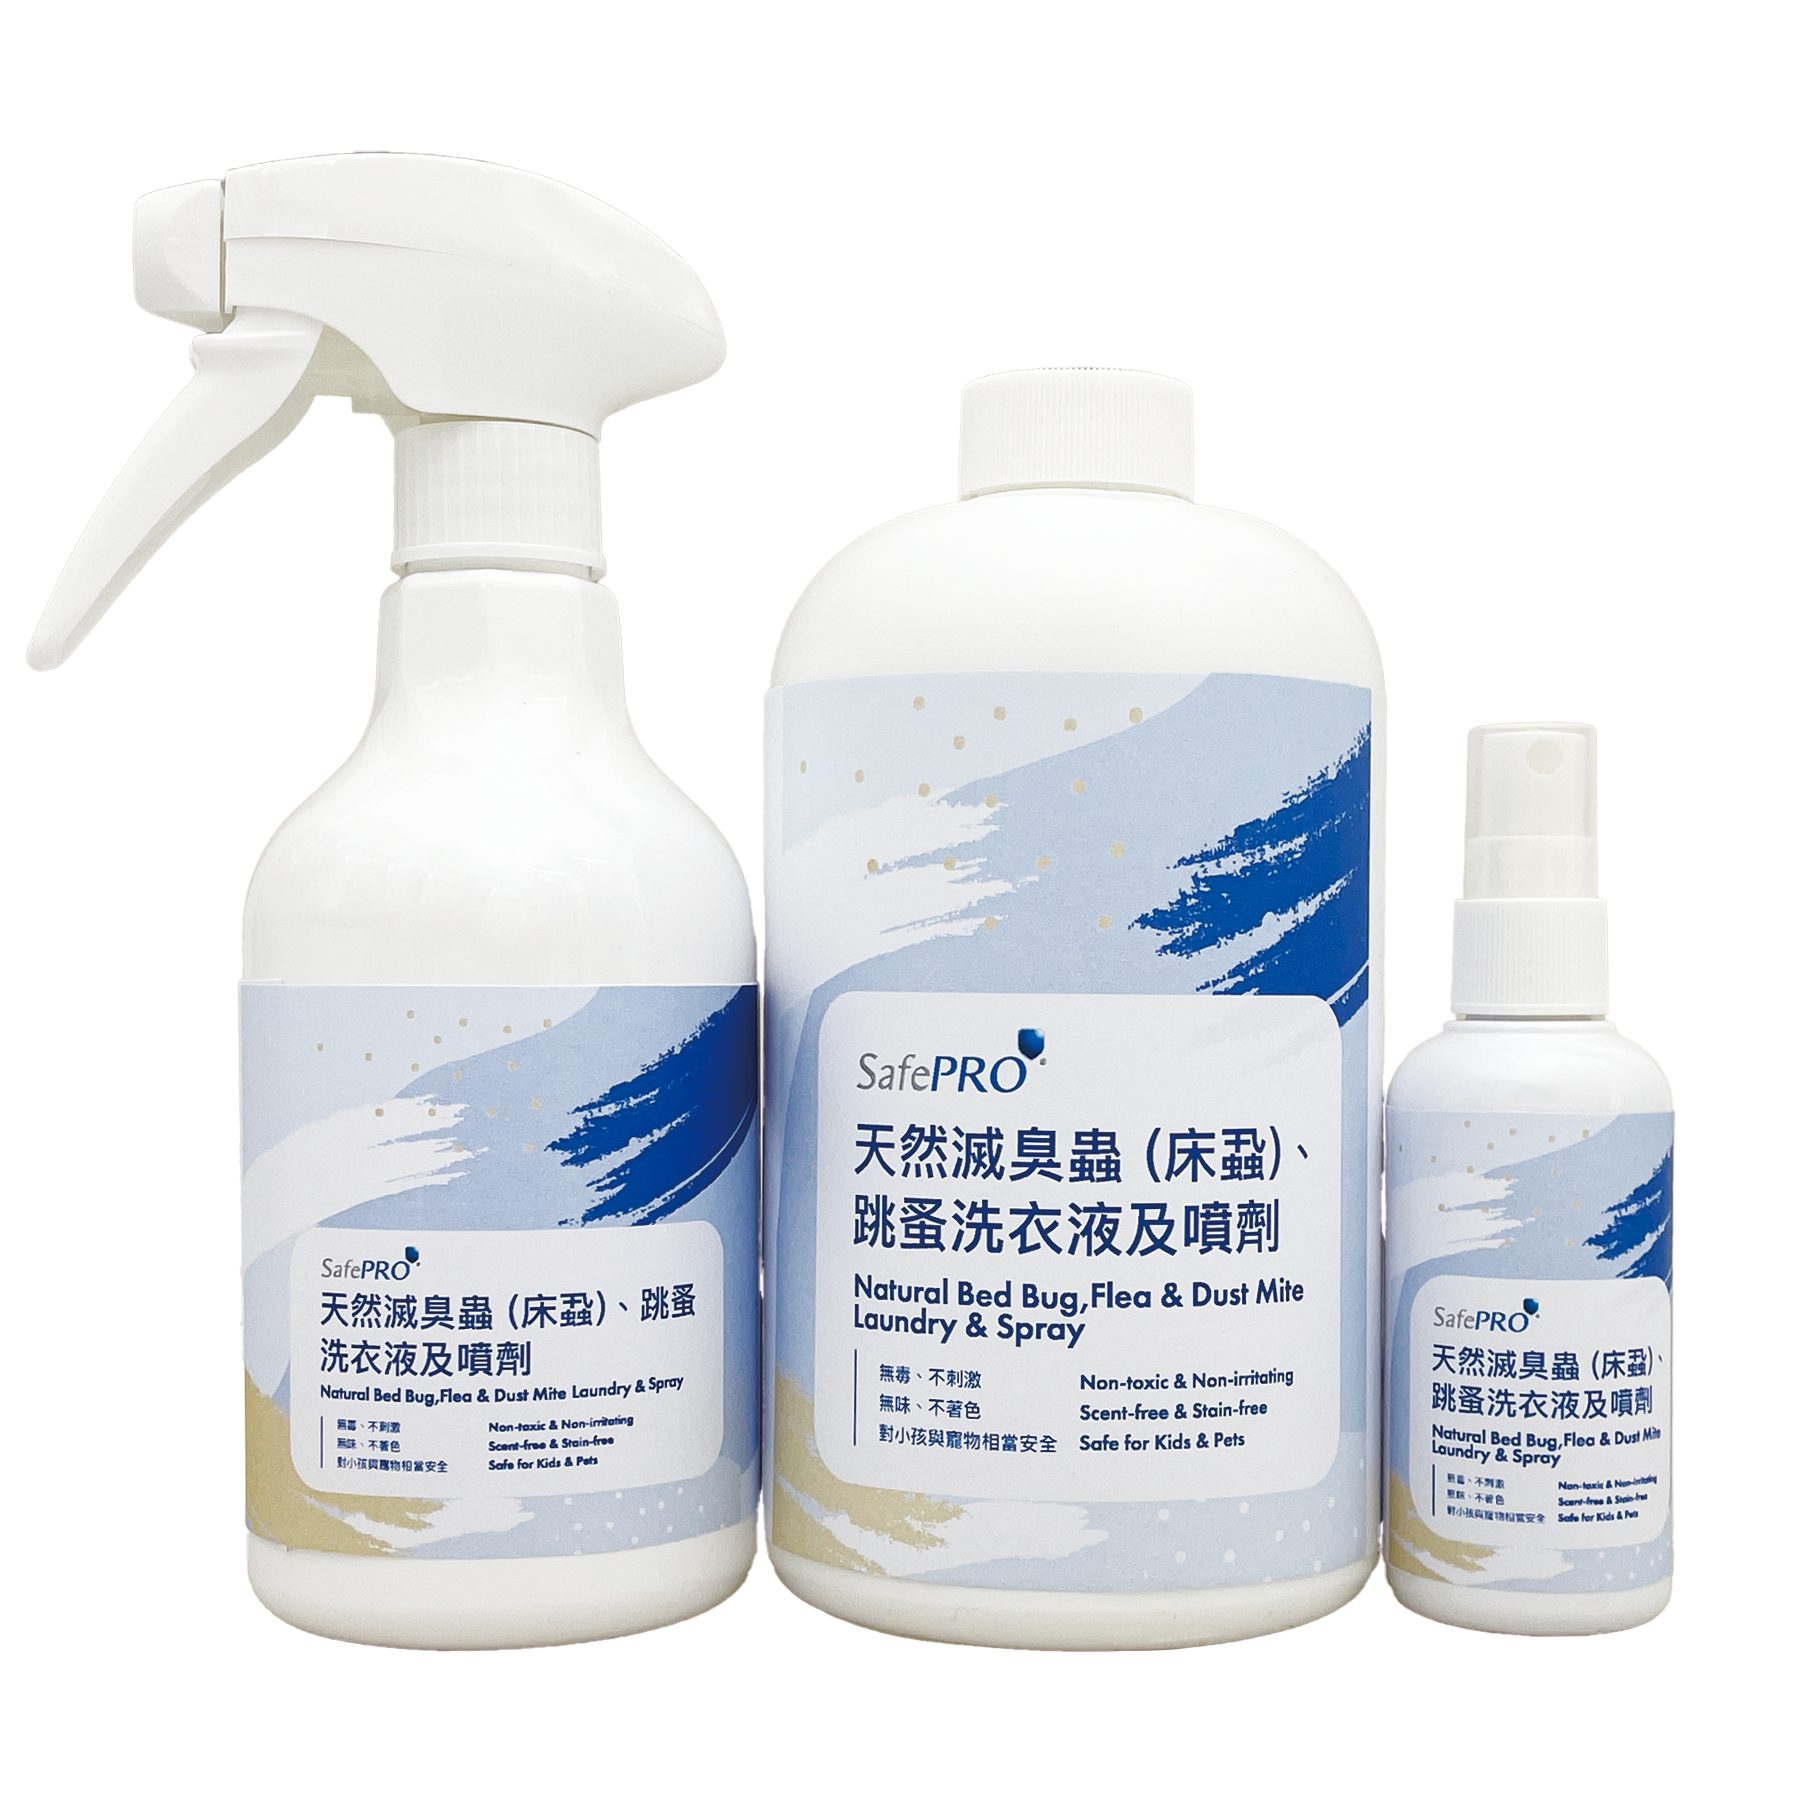 SafePRO® 天然滅臭蟲 (床蝨)、跳蚤洗衣液及噴劑